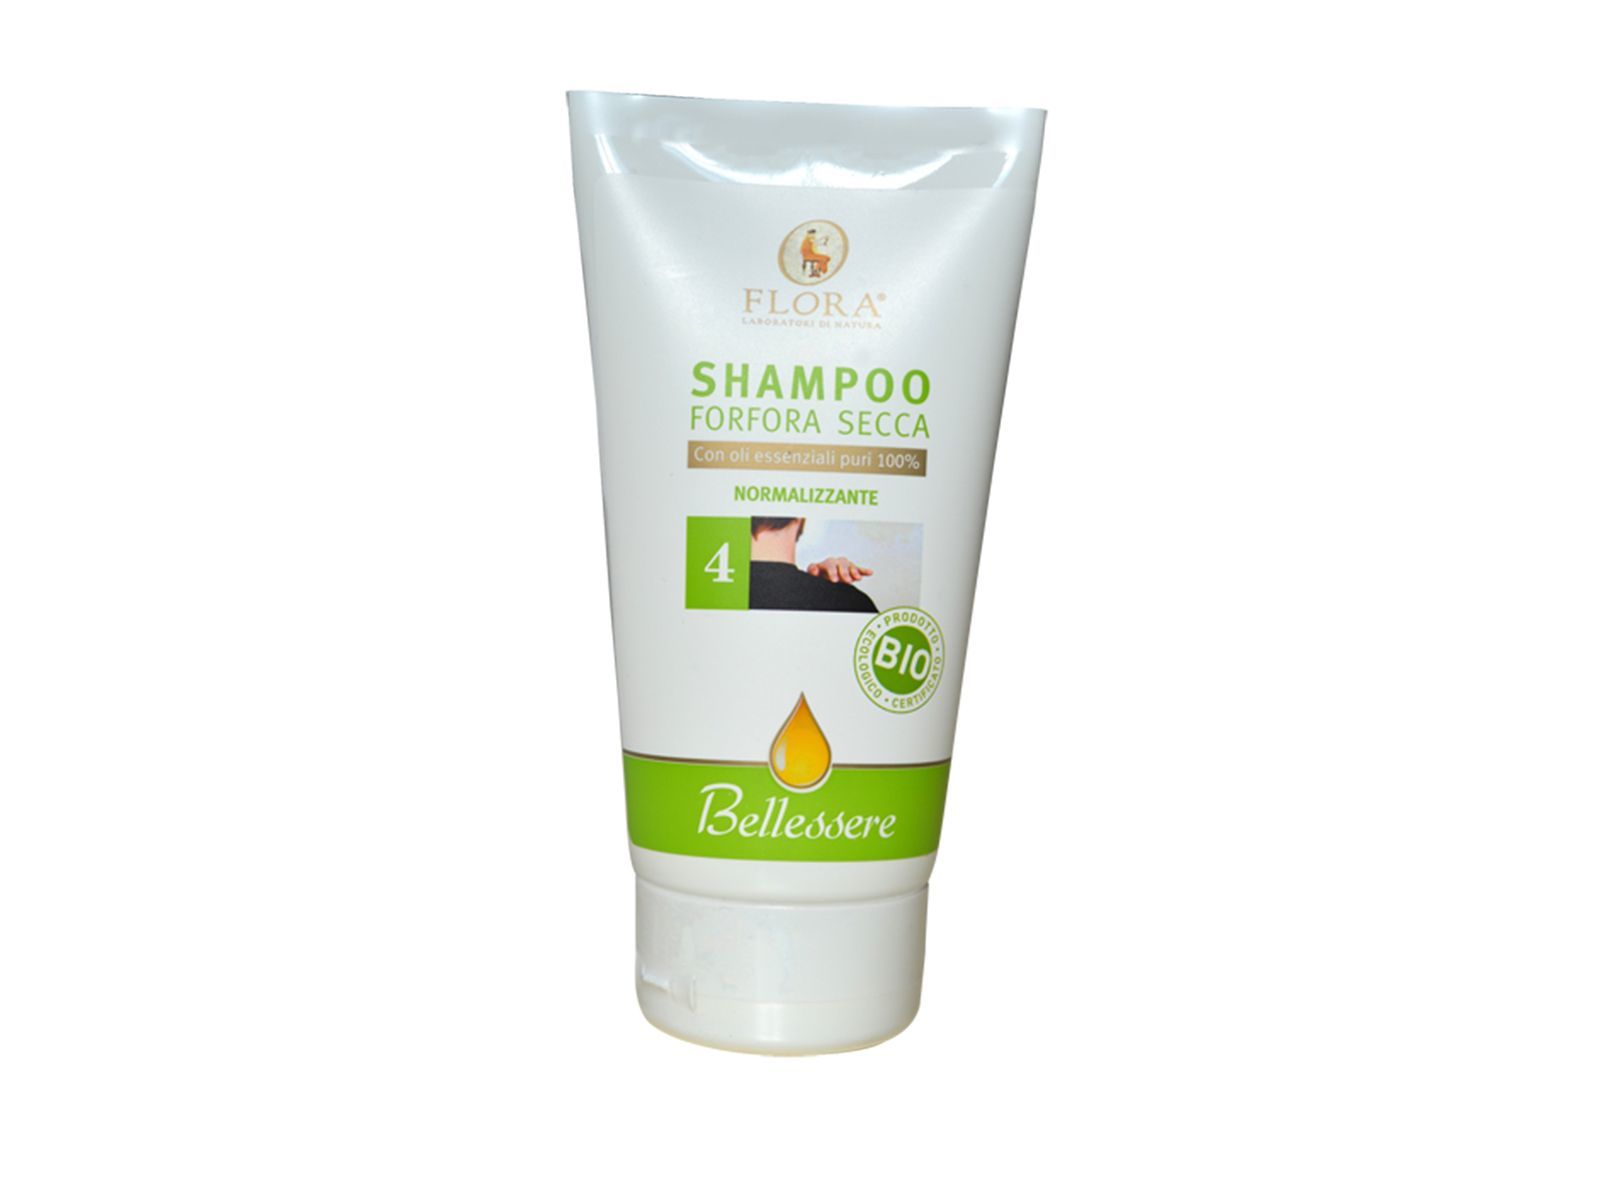 Shampoo forfora secca - Contenuto 150 ml